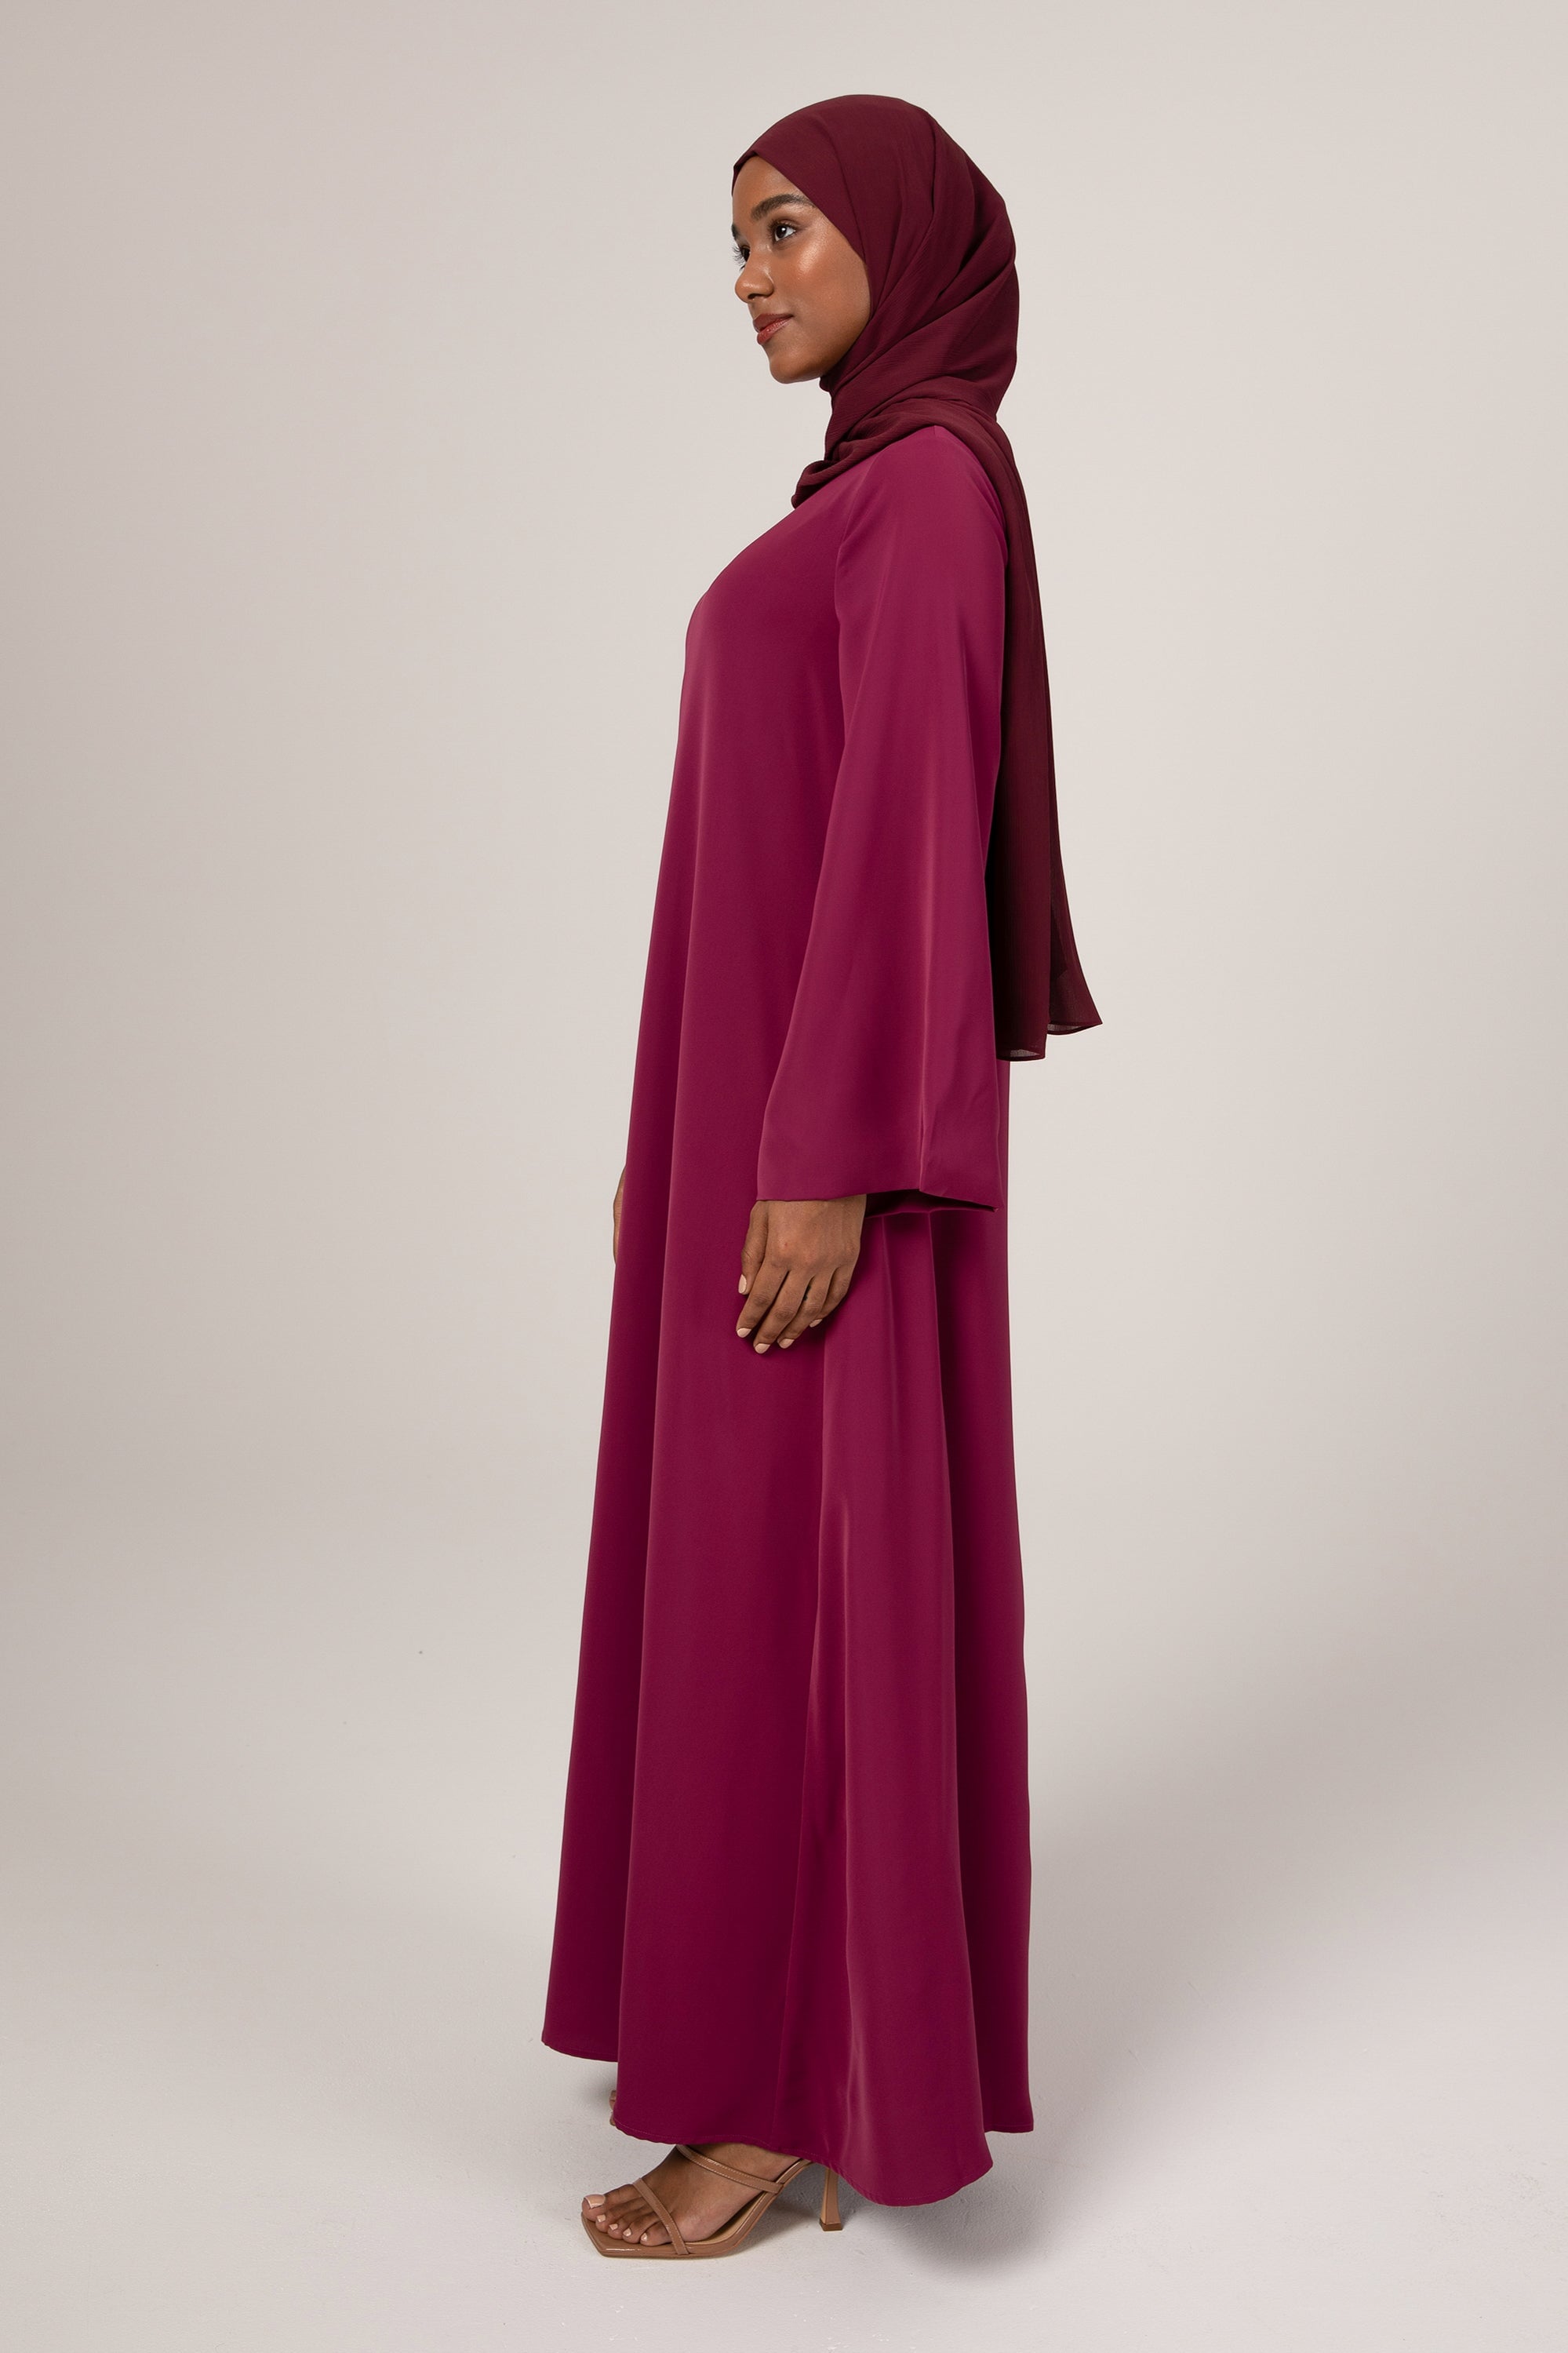 Jenna Flowy Circle Maxi Dress - Deep Purple Veiled Collection 